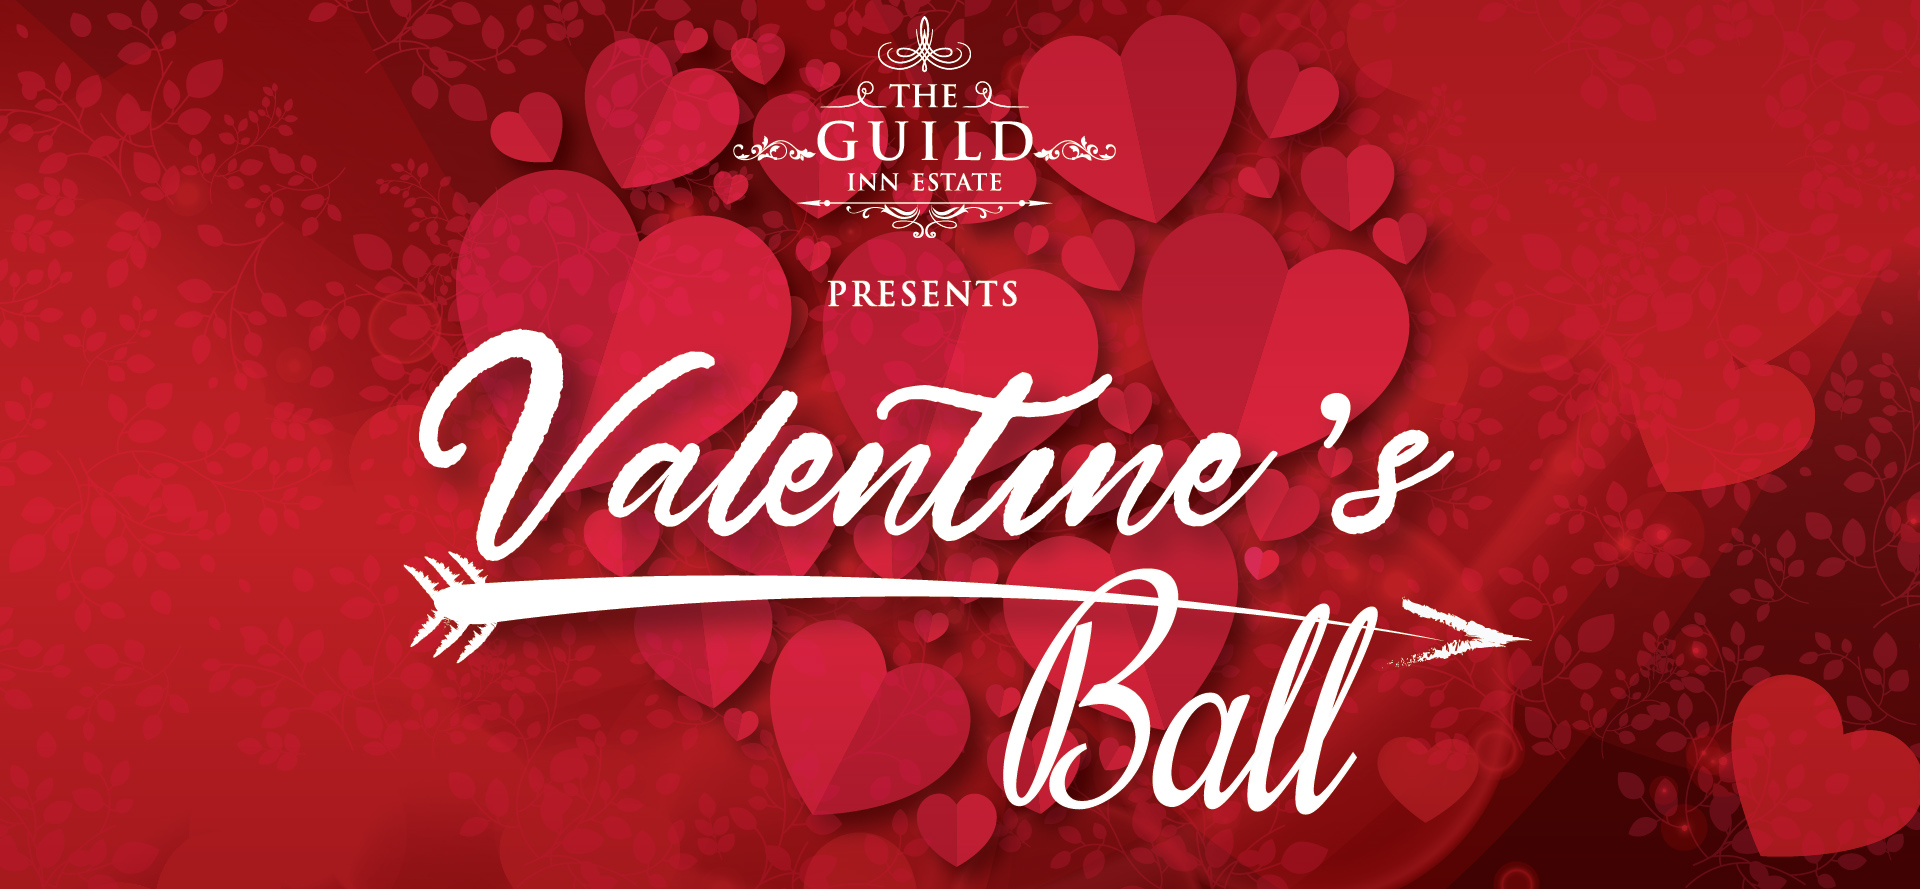 Valentine’s Day Ball At The Guild Inn Estate